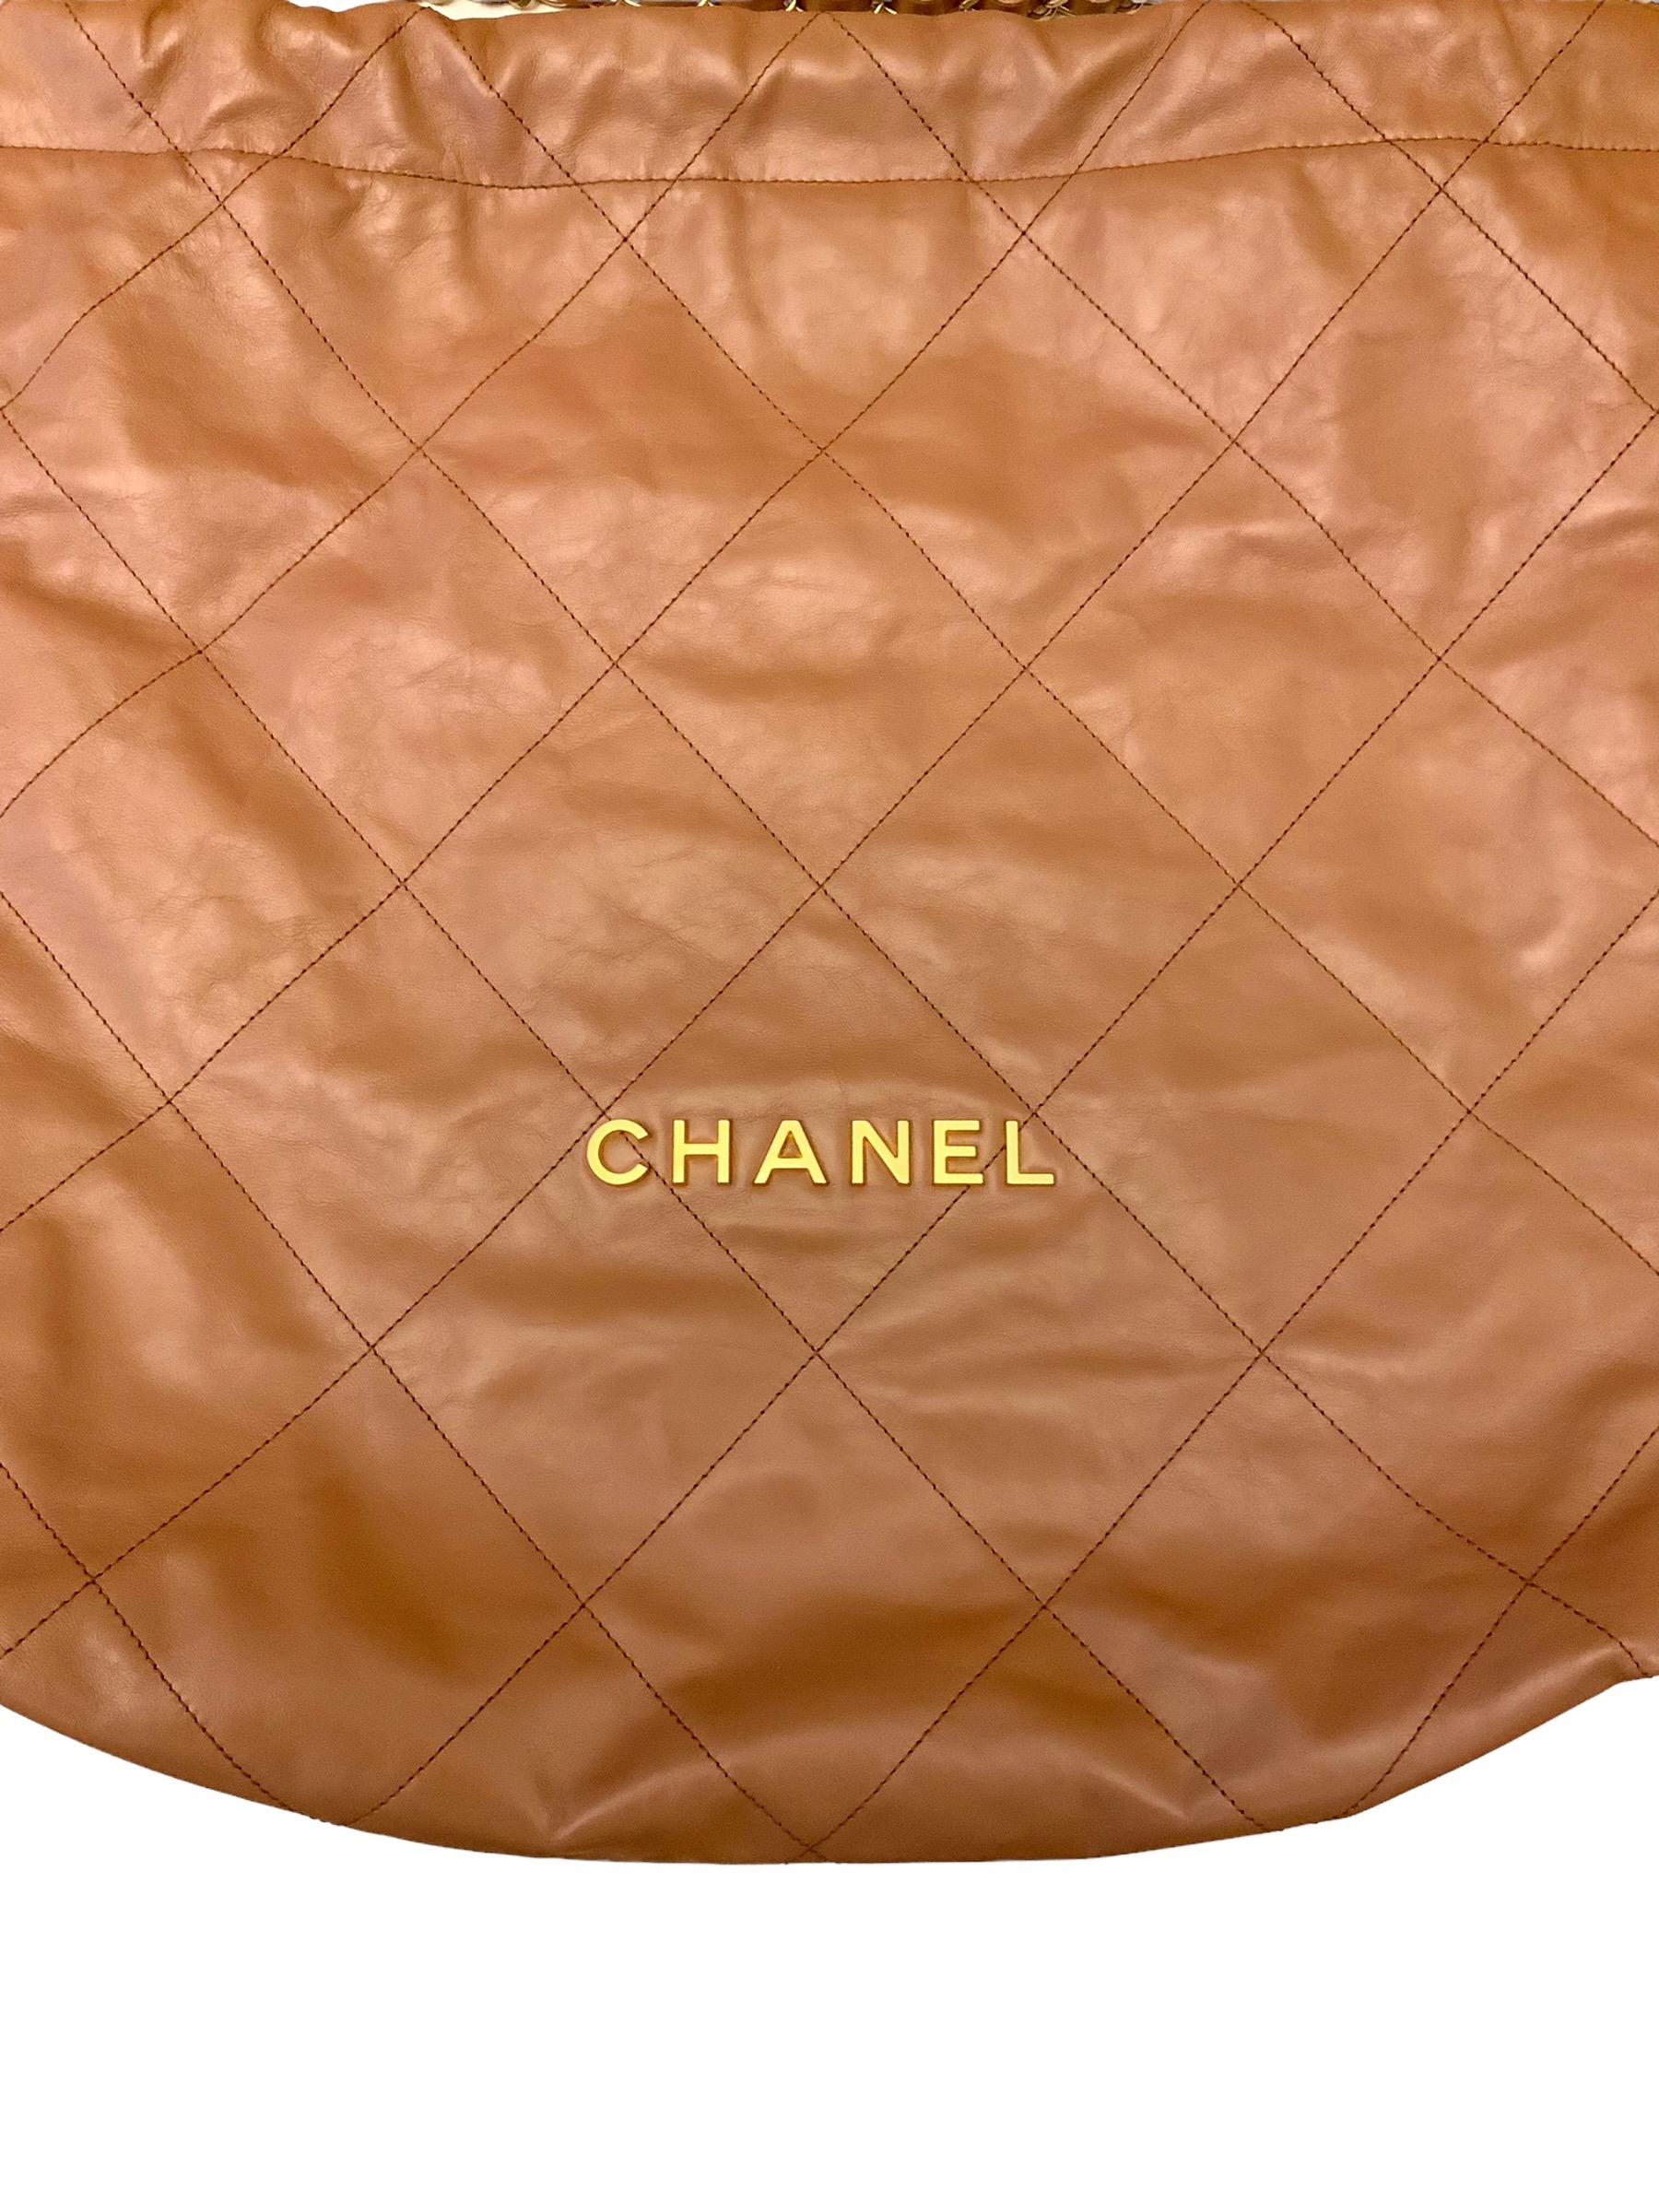 chanel 22 large handbag